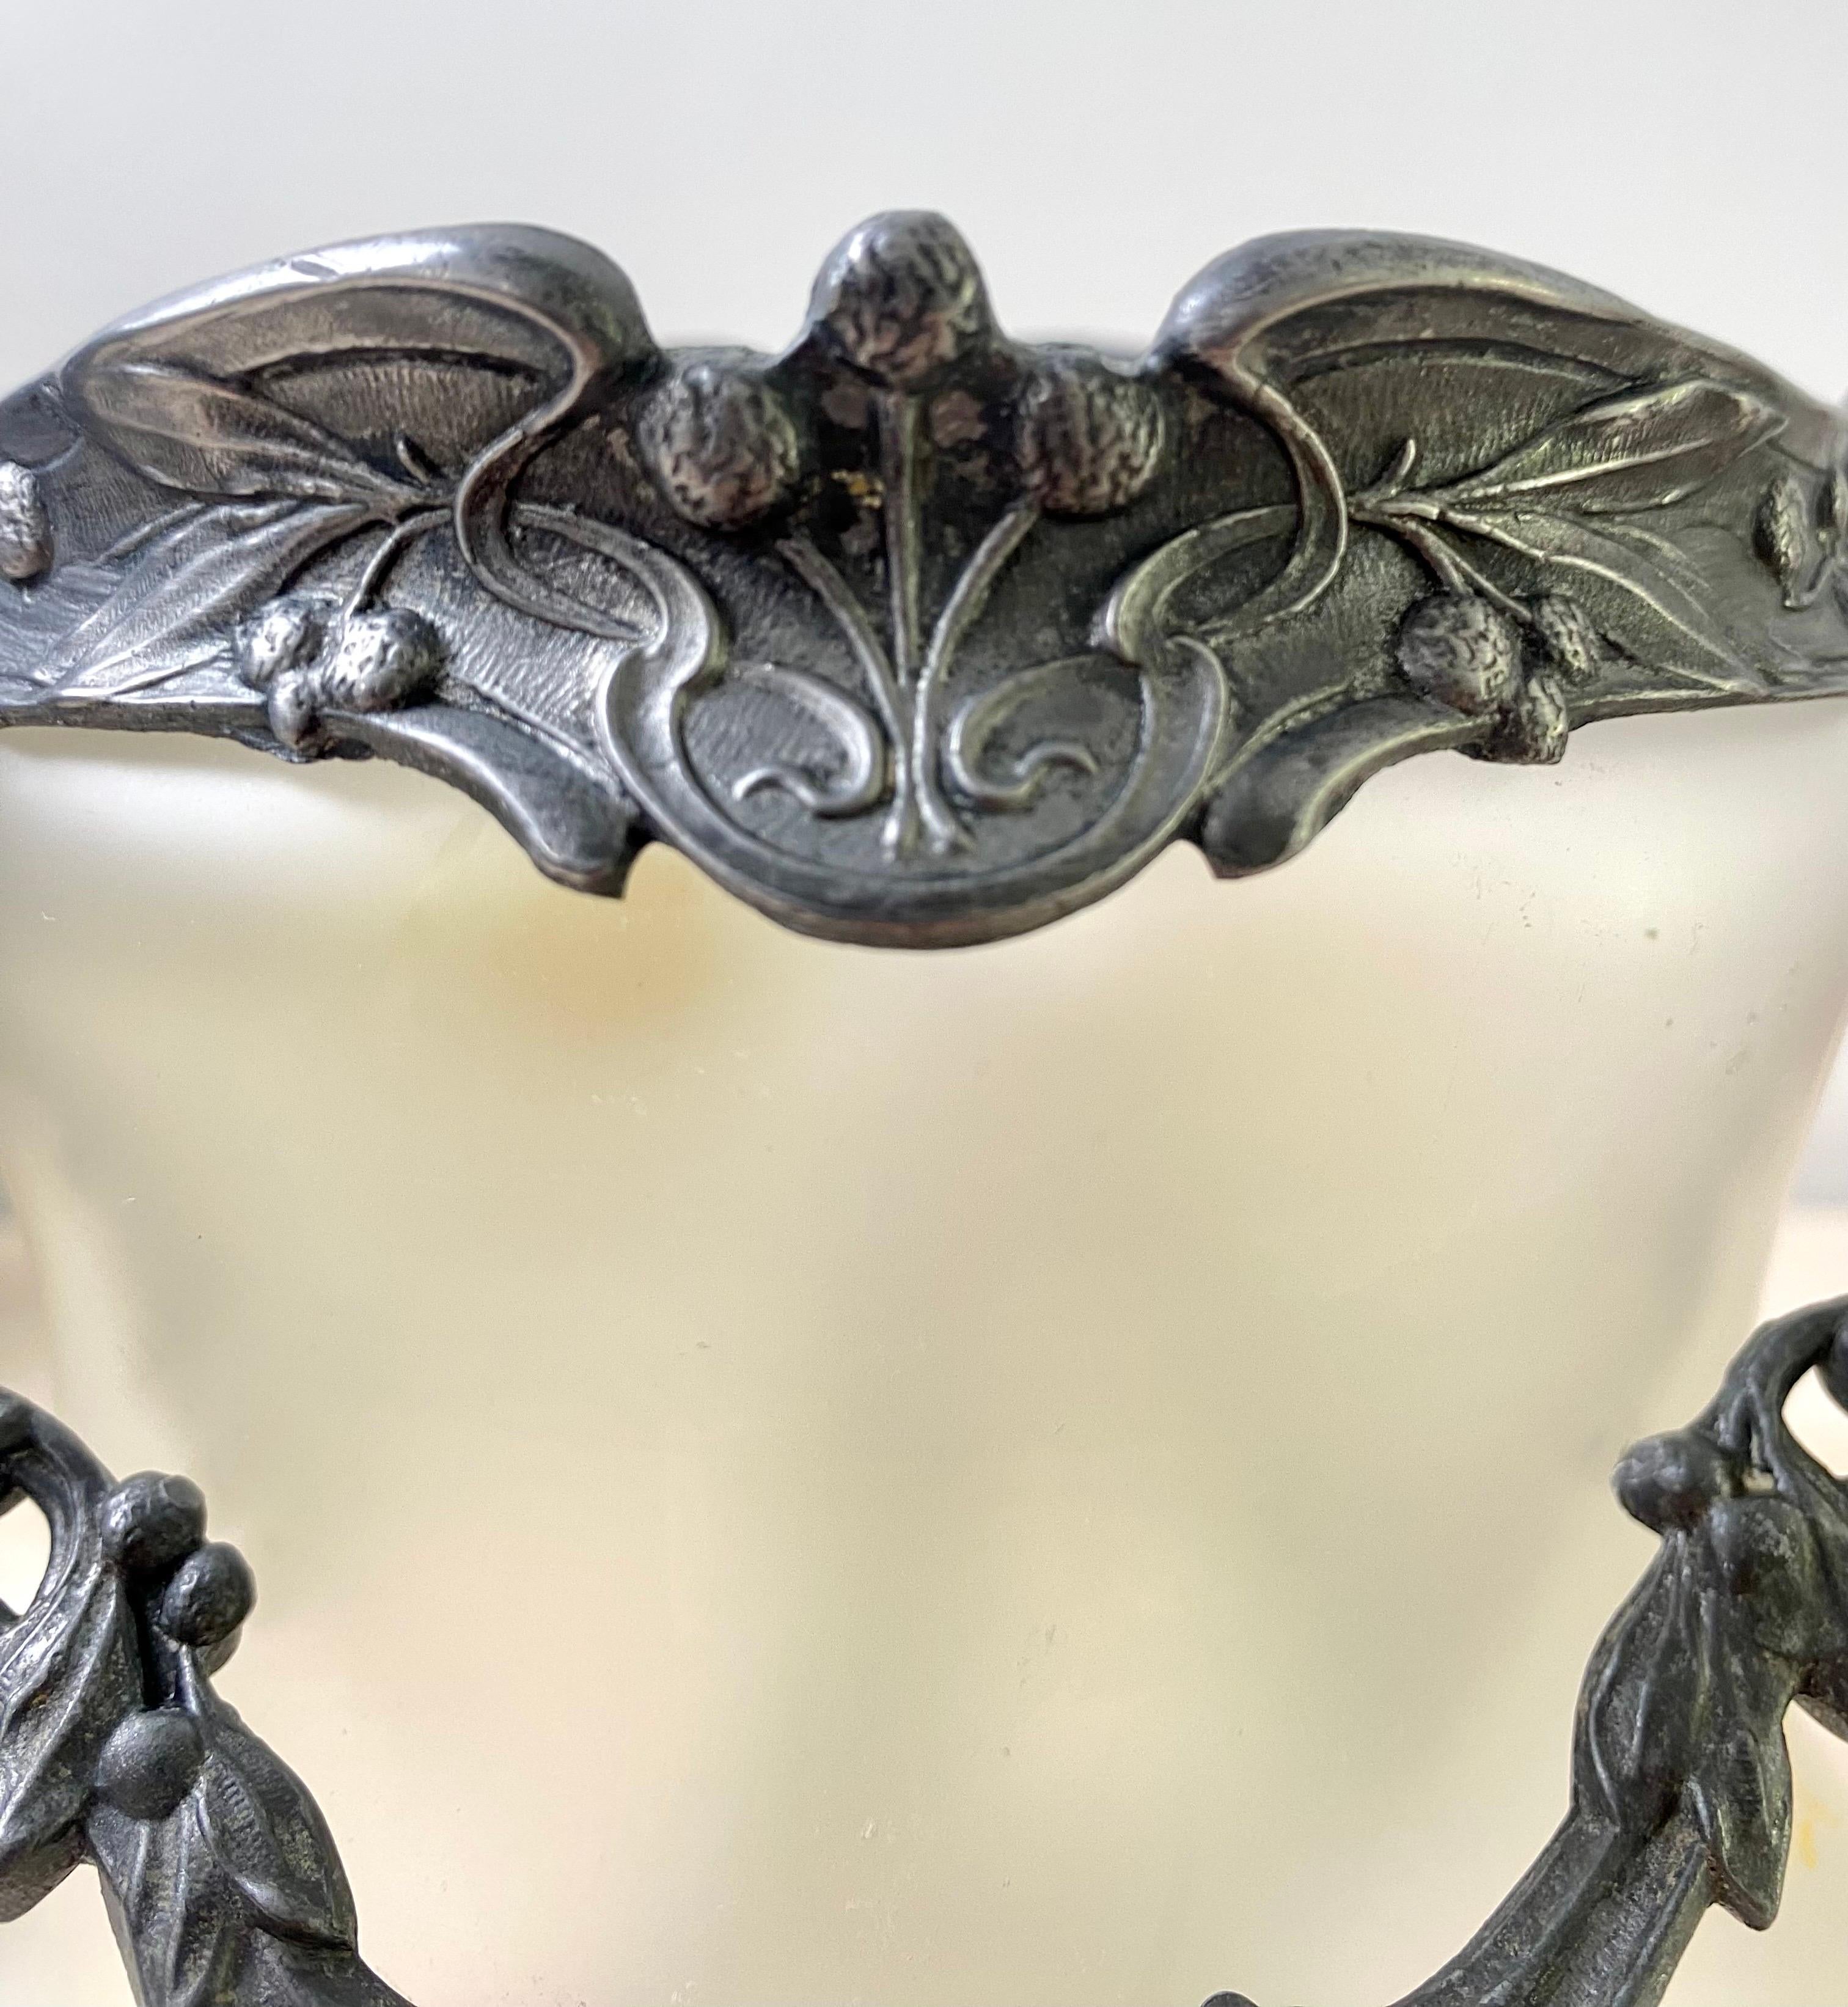 Keksdose Eimer - Vase - aus emailliertem Glas und Zinn- 1880 Jugendstil Frankreich (Art nouveau) im Angebot